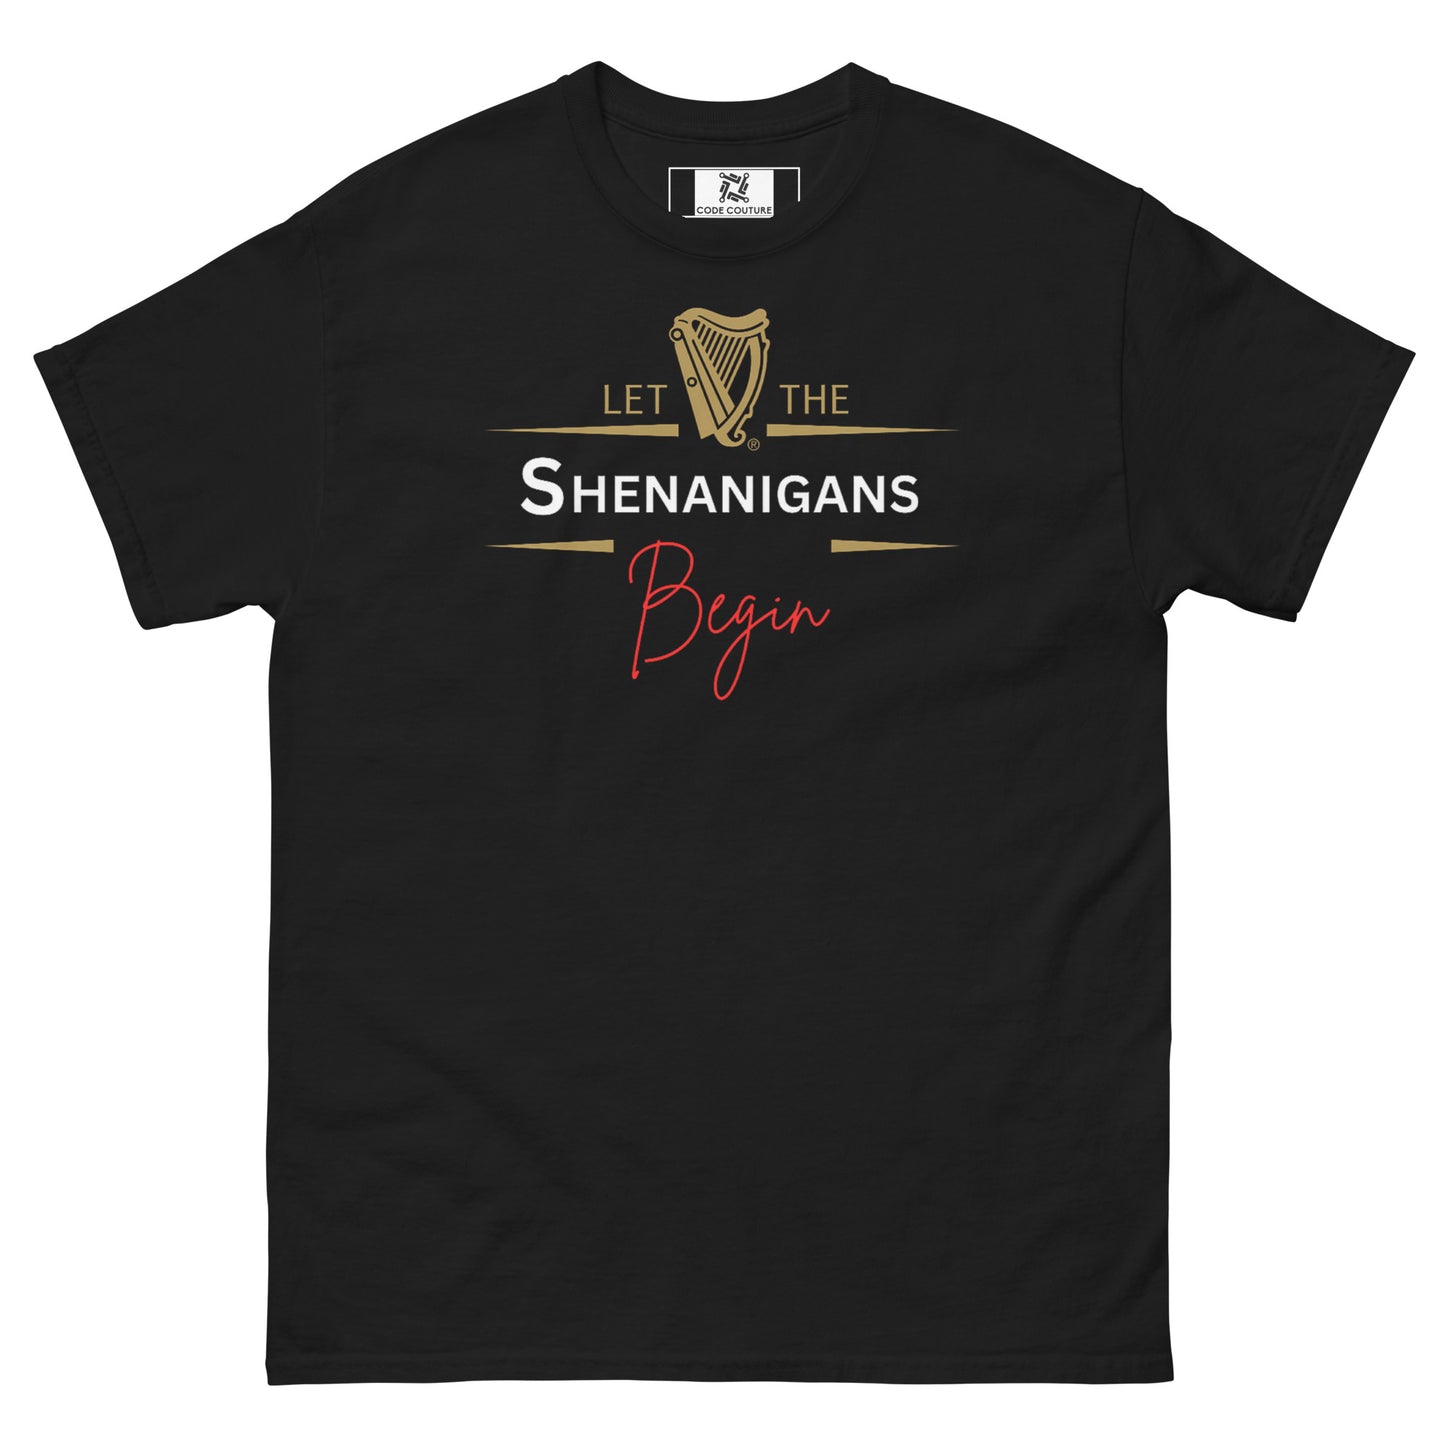 Shenanigans classic tee - Black